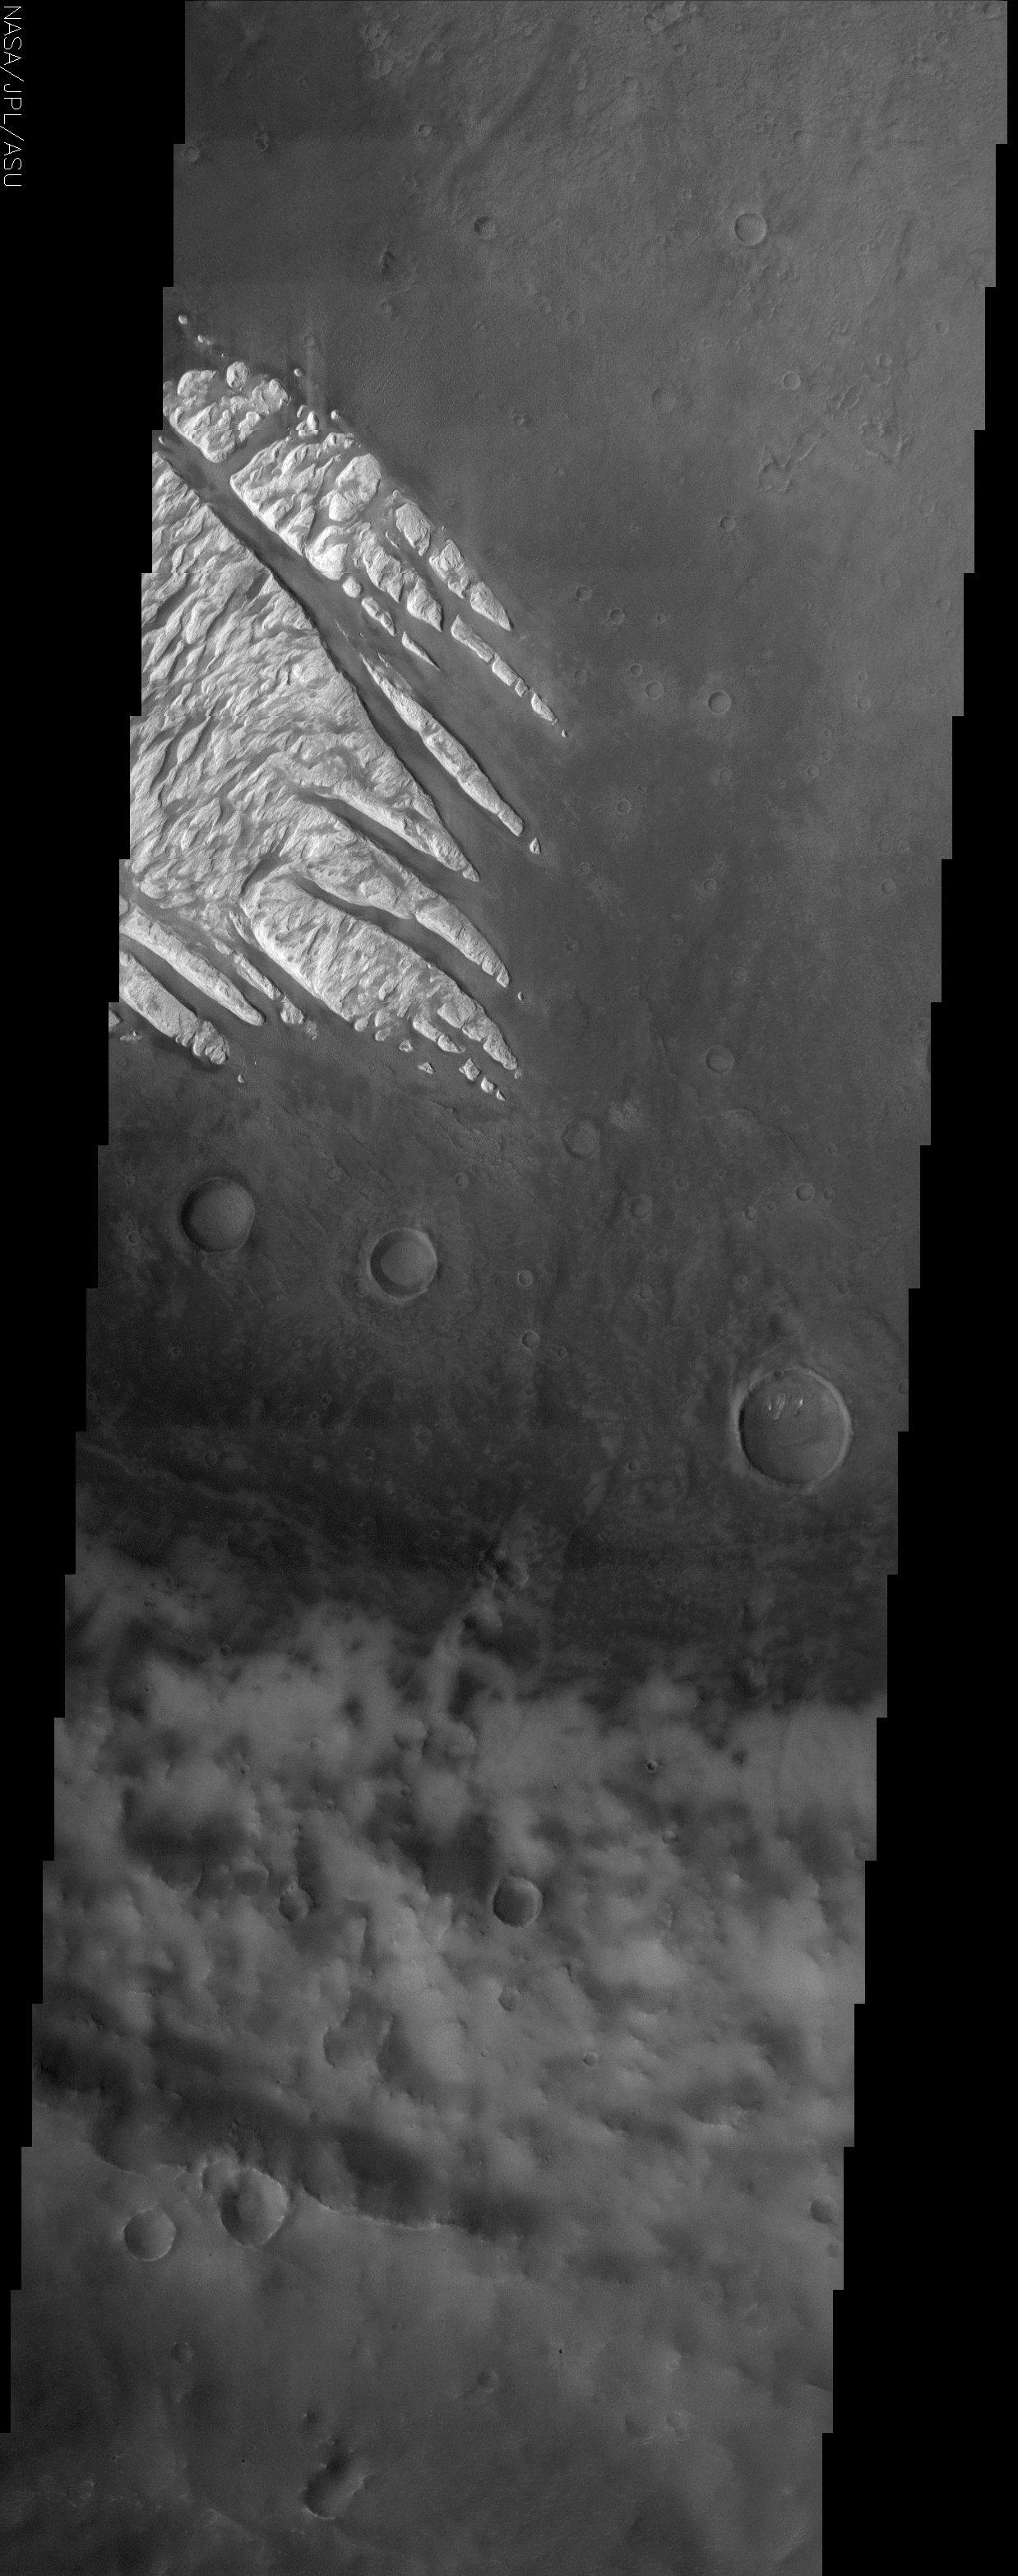 Belye kamennye "pal'cy" na Marse